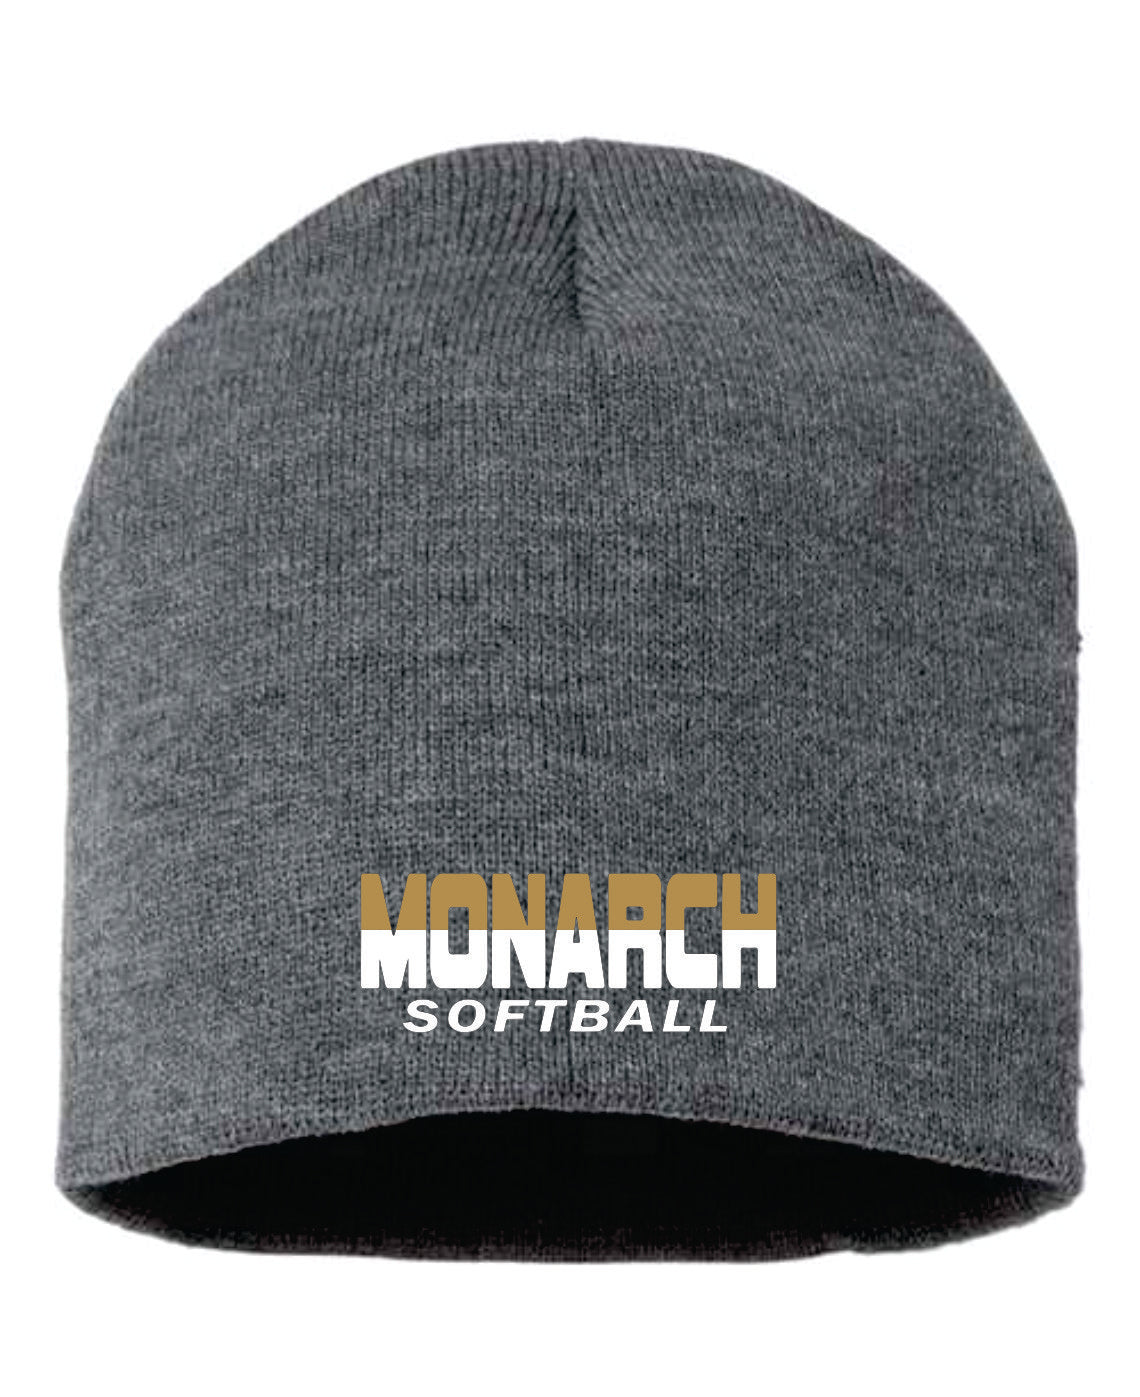 Monarch Softball Hats